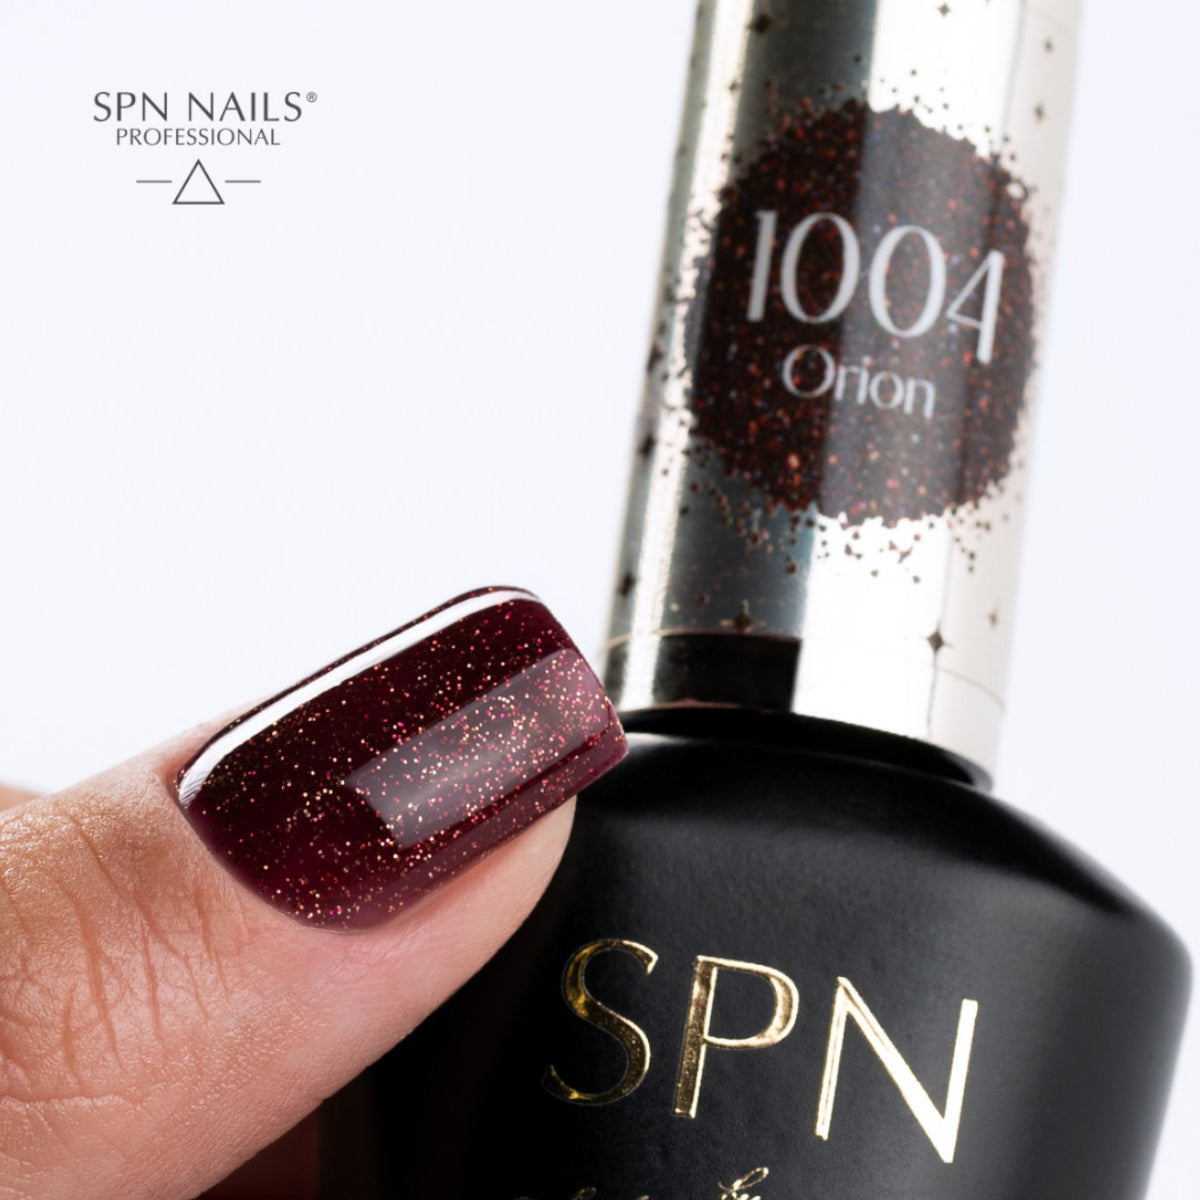 SPN Nails UV/LED Gel Polish 1004 Orion Colour Swatch